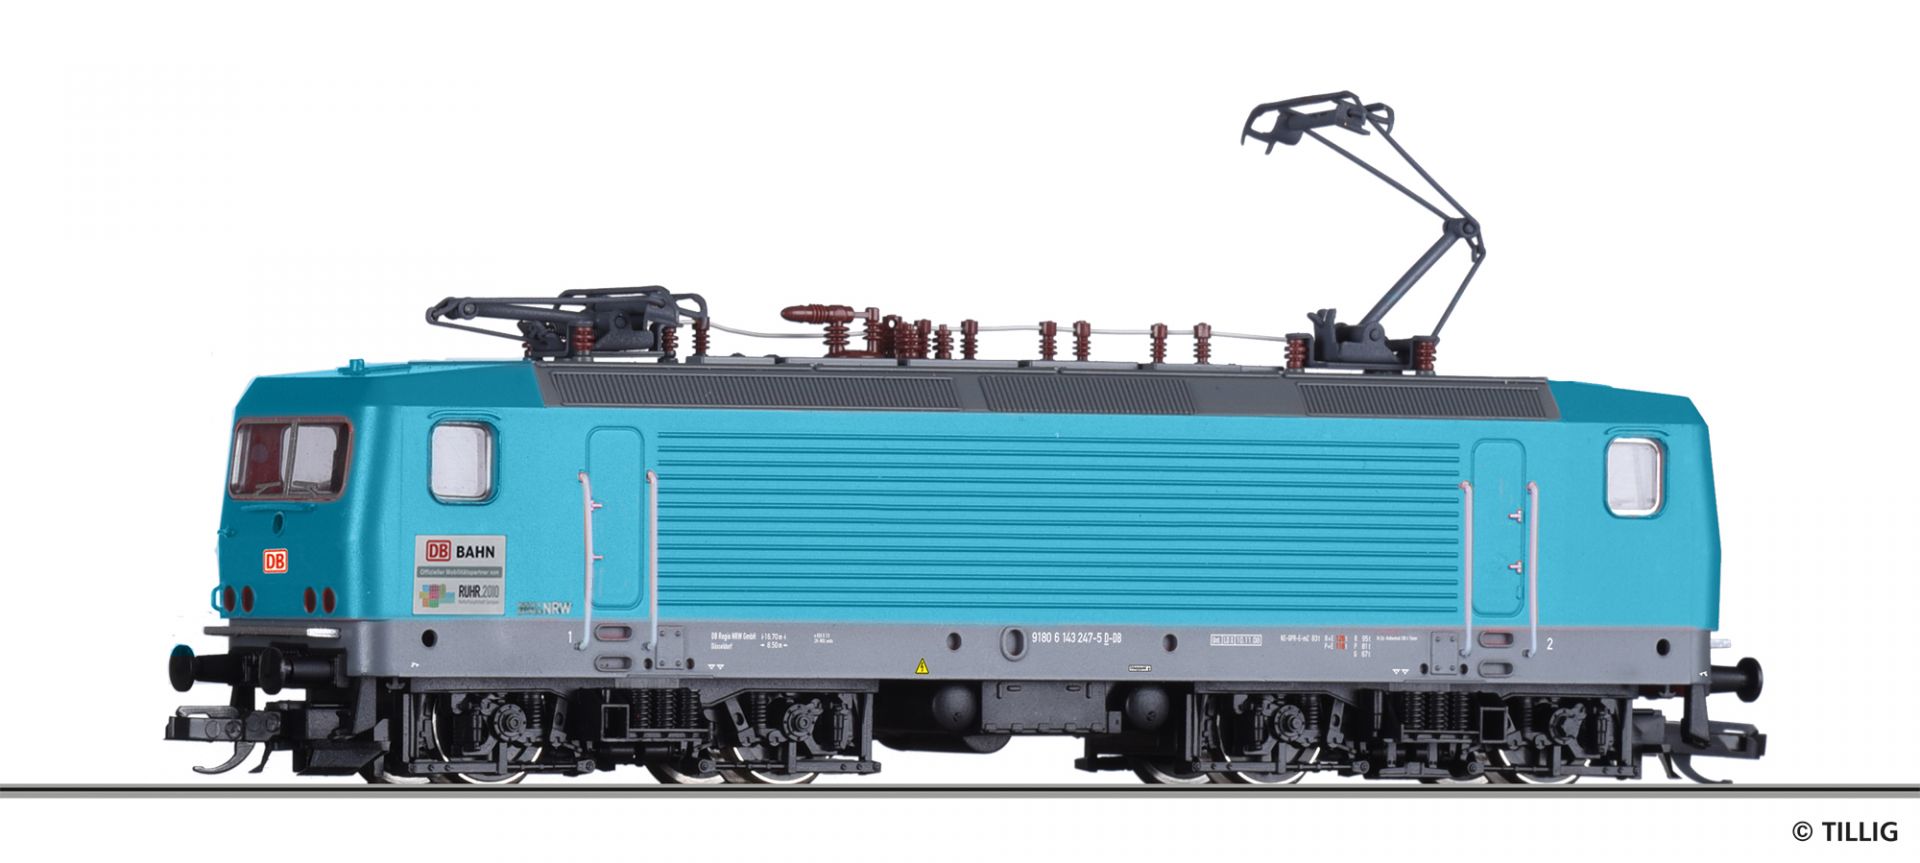 04345-tillig-modellbahnen